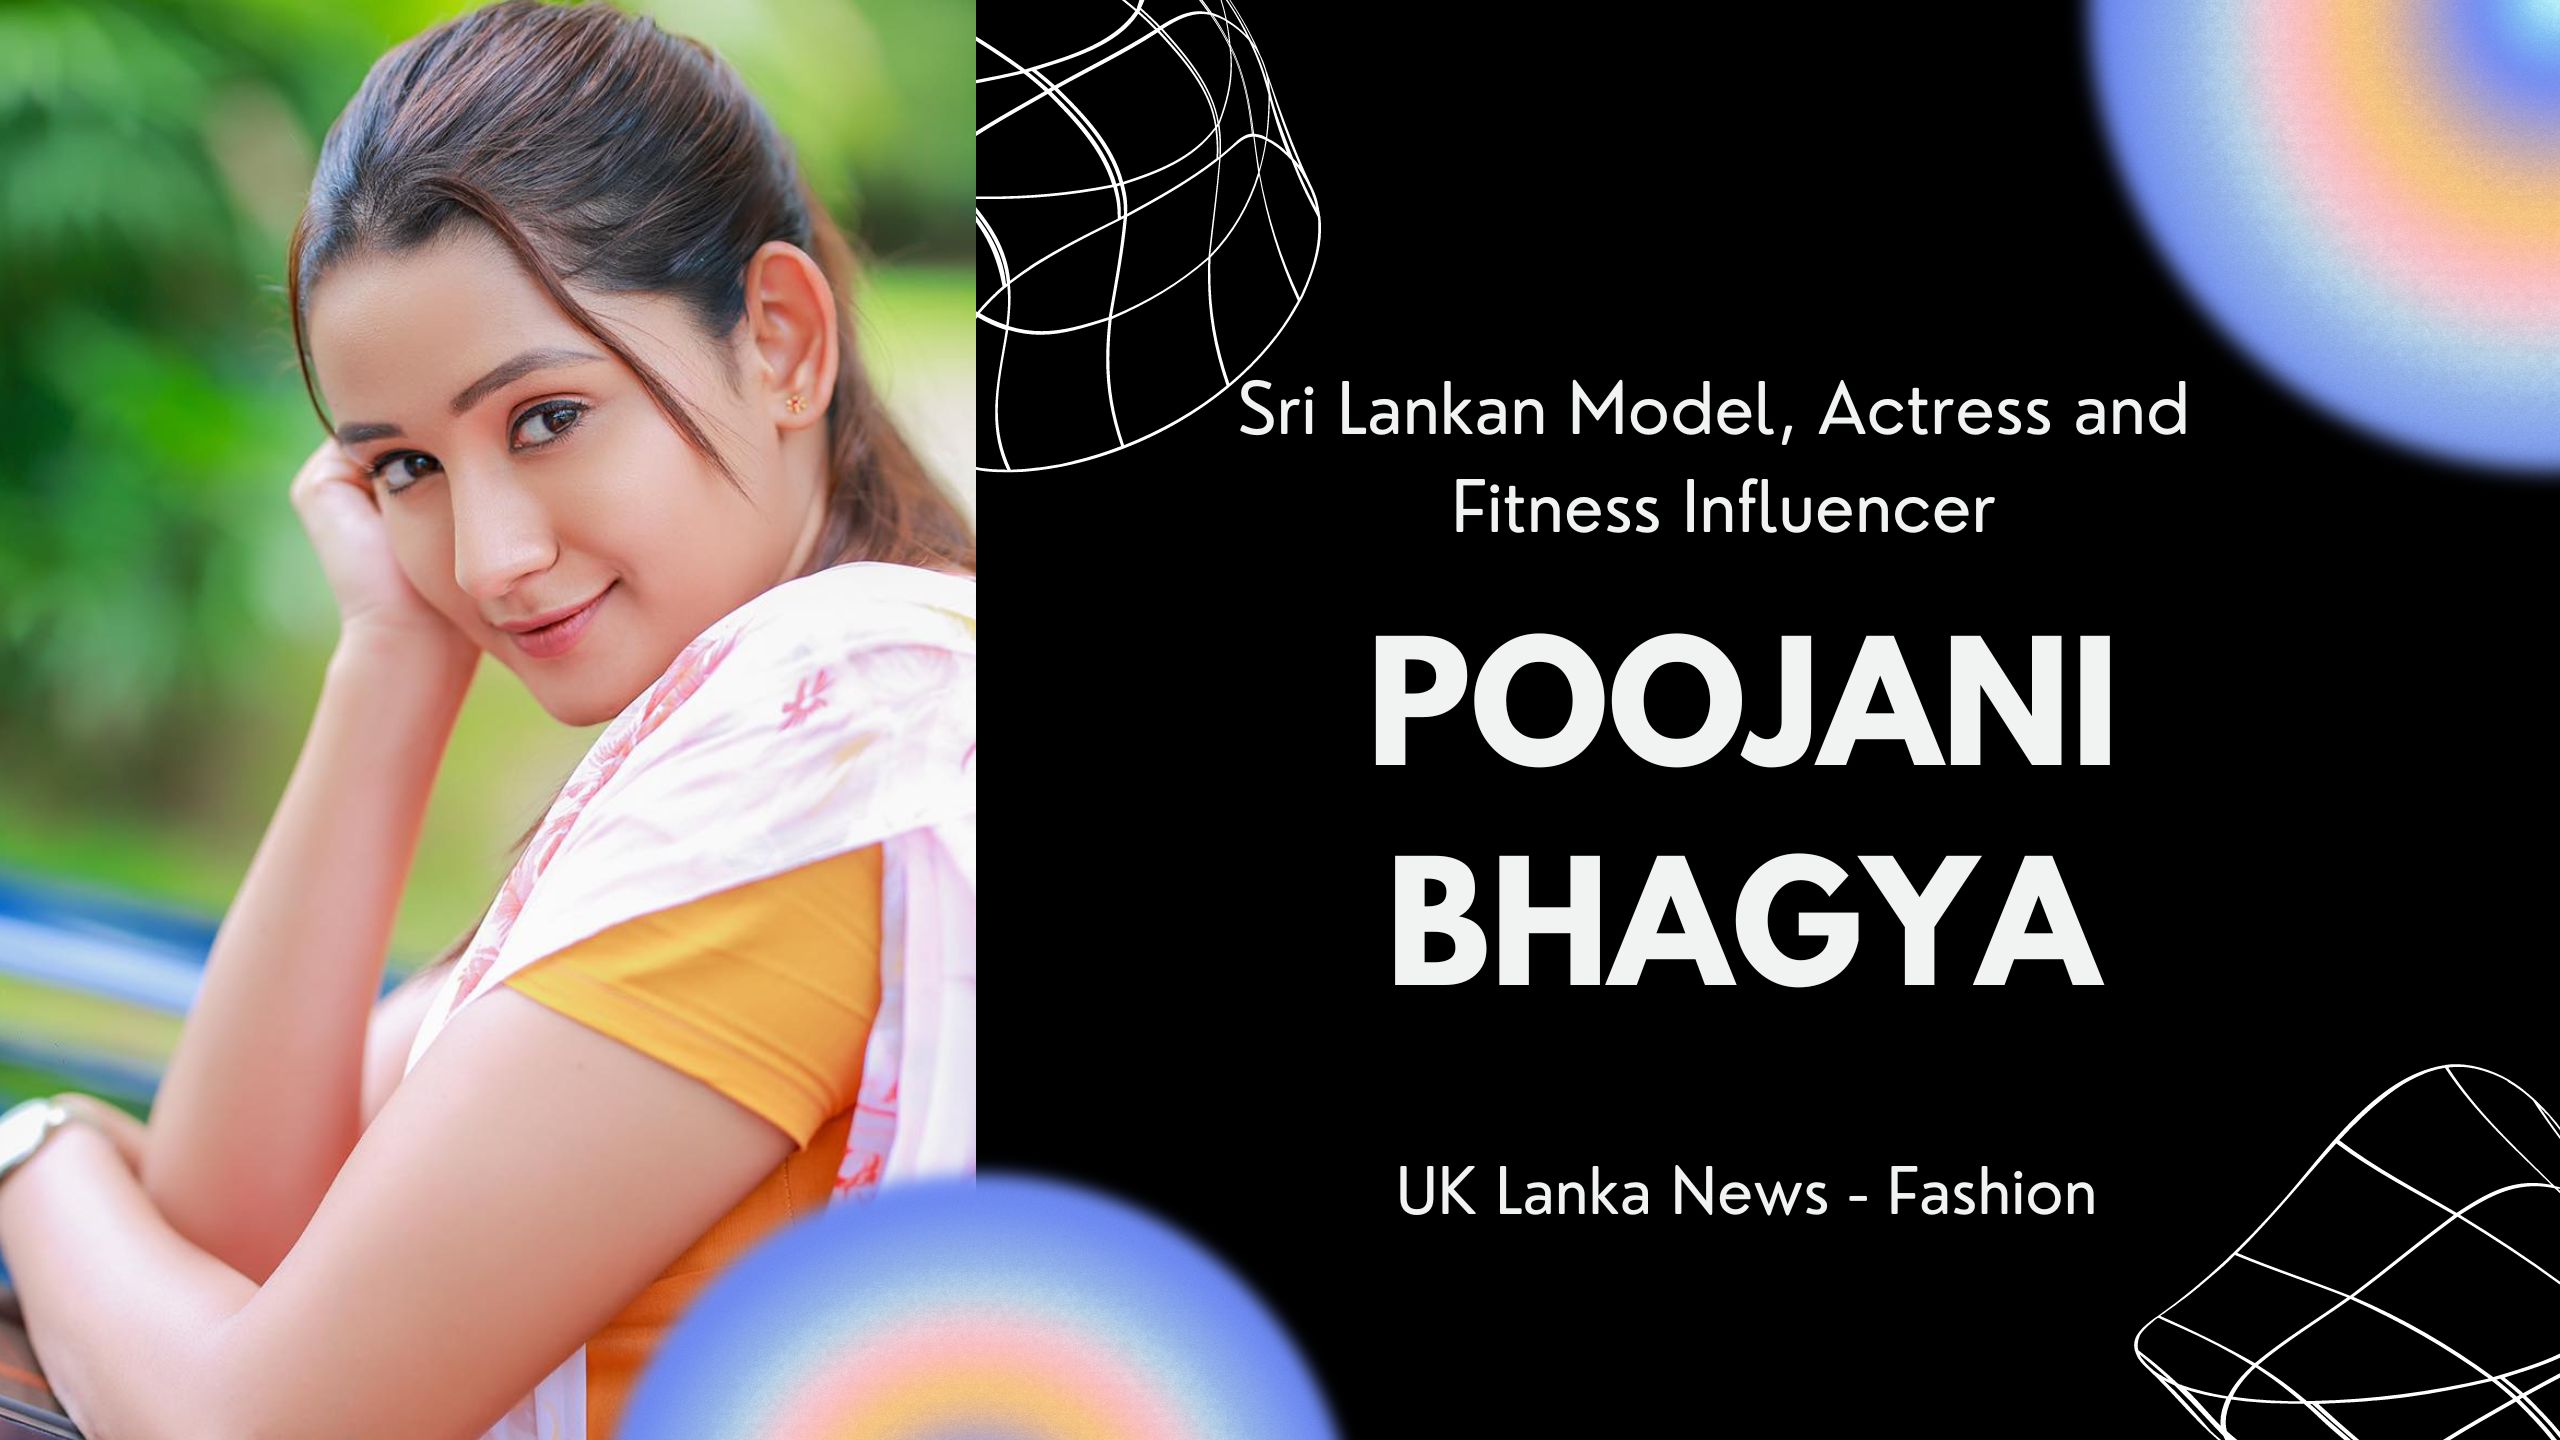 Poojani Bhagya